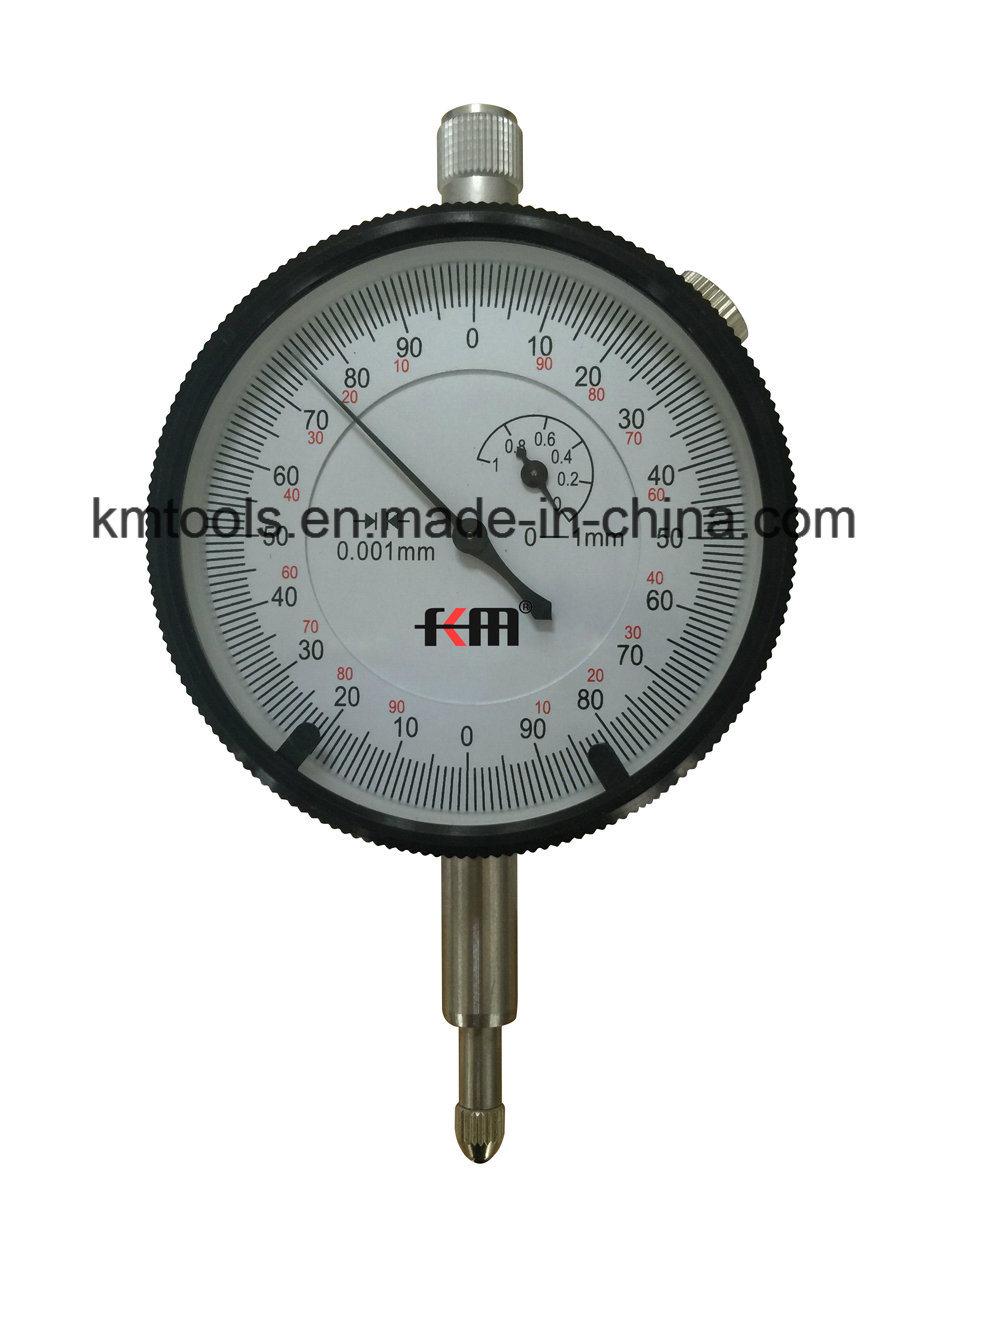 0-1mmx0.001mm Precise Dial Indicator Gauge